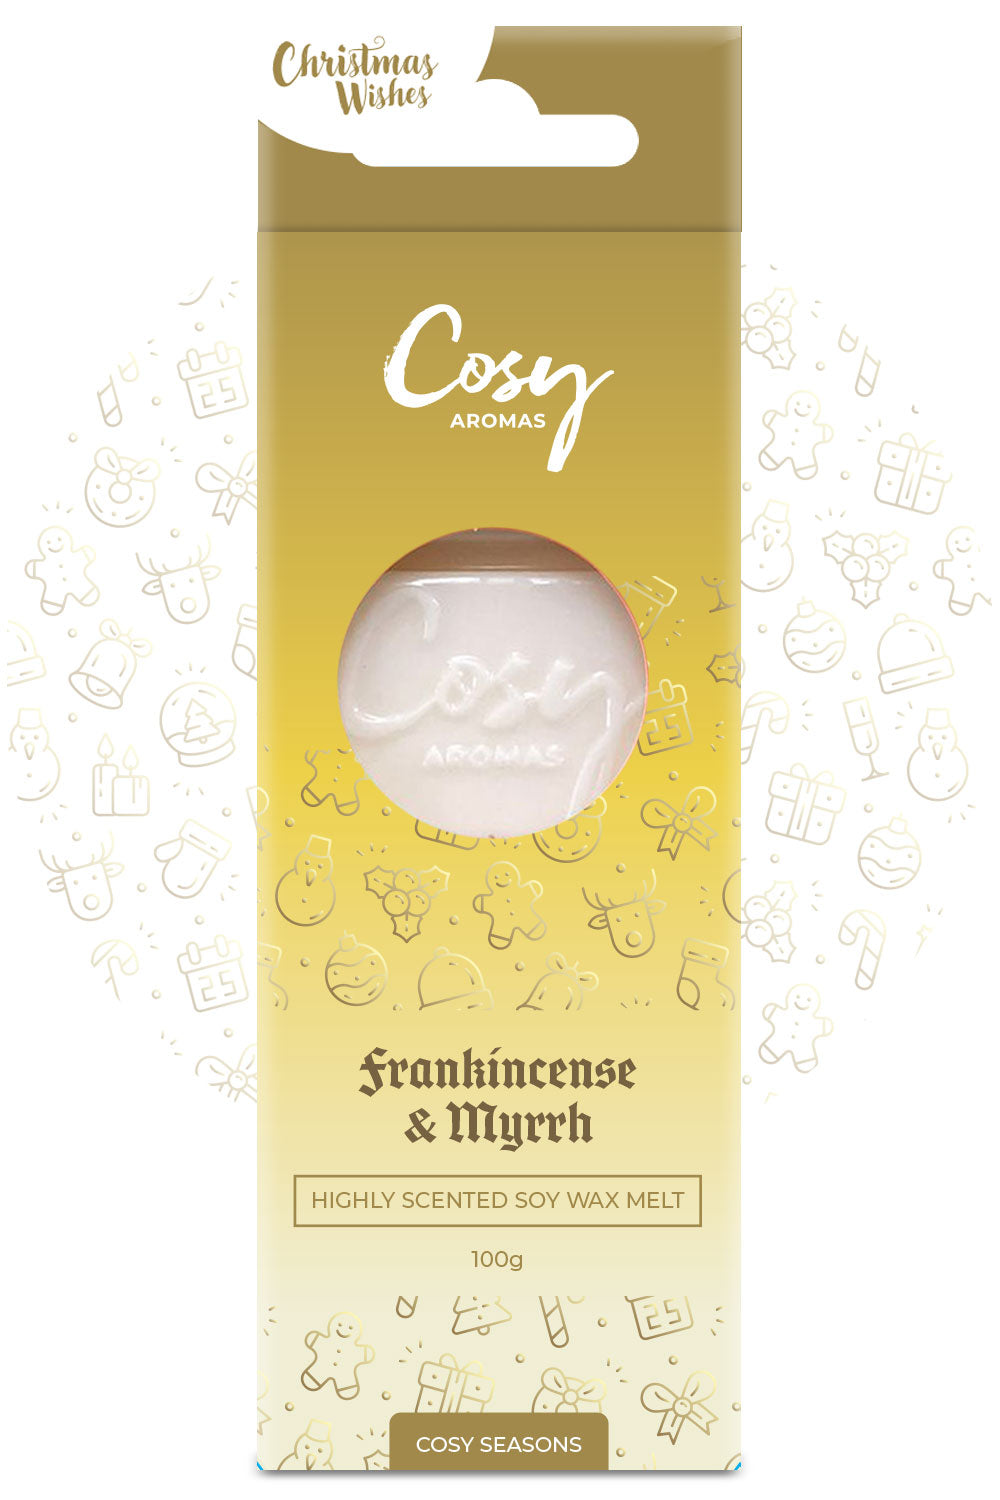 Frankincense & Myrrh Wax Melt